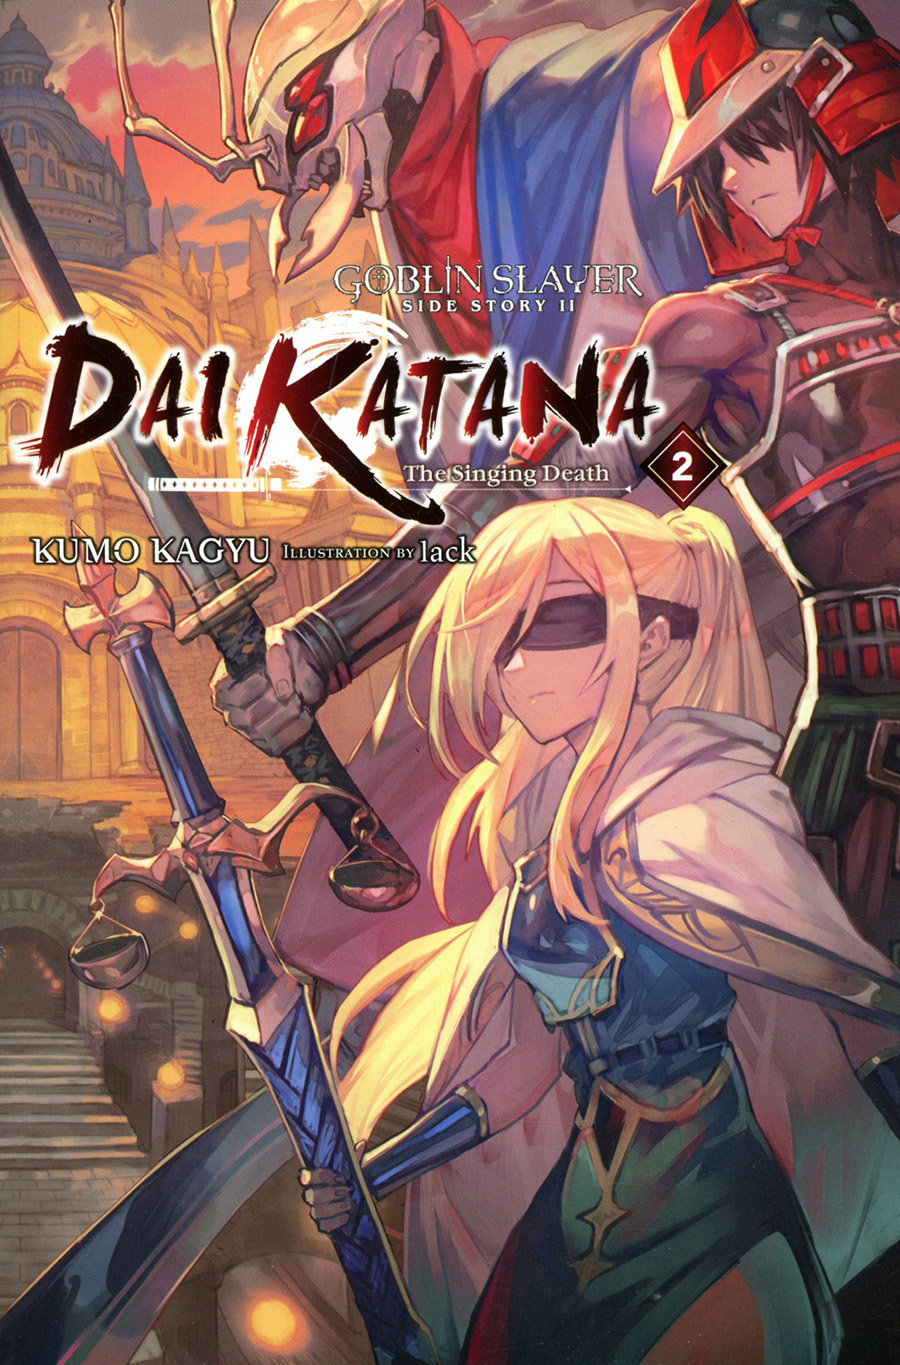 Goblin Slayer Side Story II Dai Katana The Singing Death Light Novel Vol 2